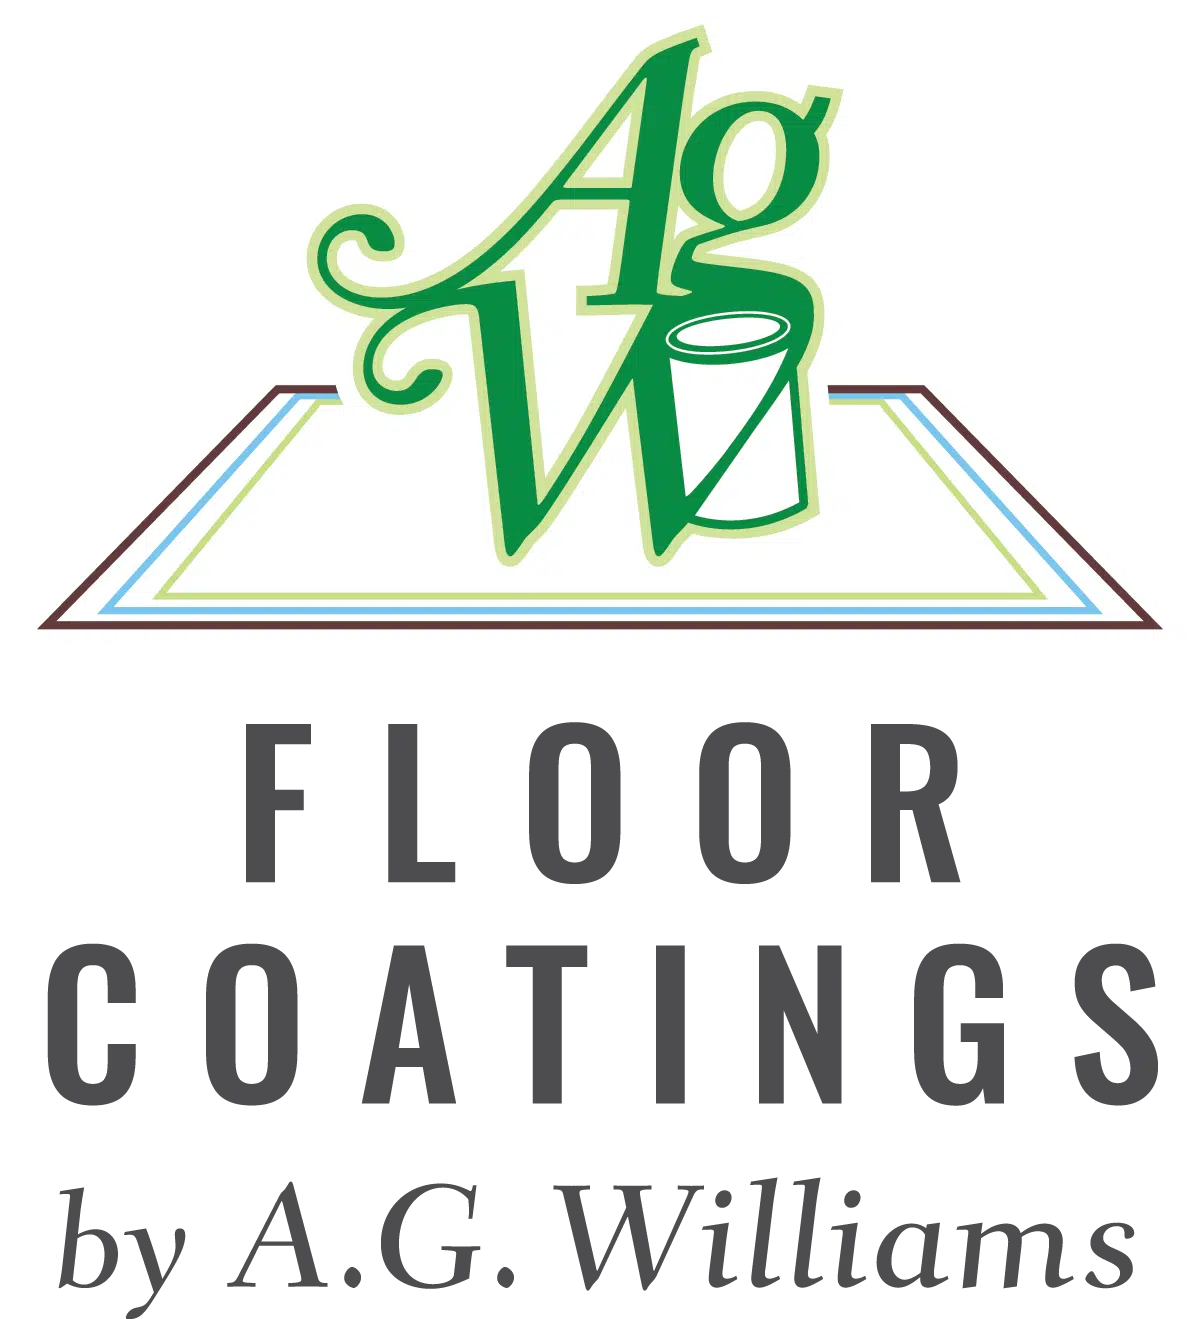 AGW_FloorCoating_Logo (1)